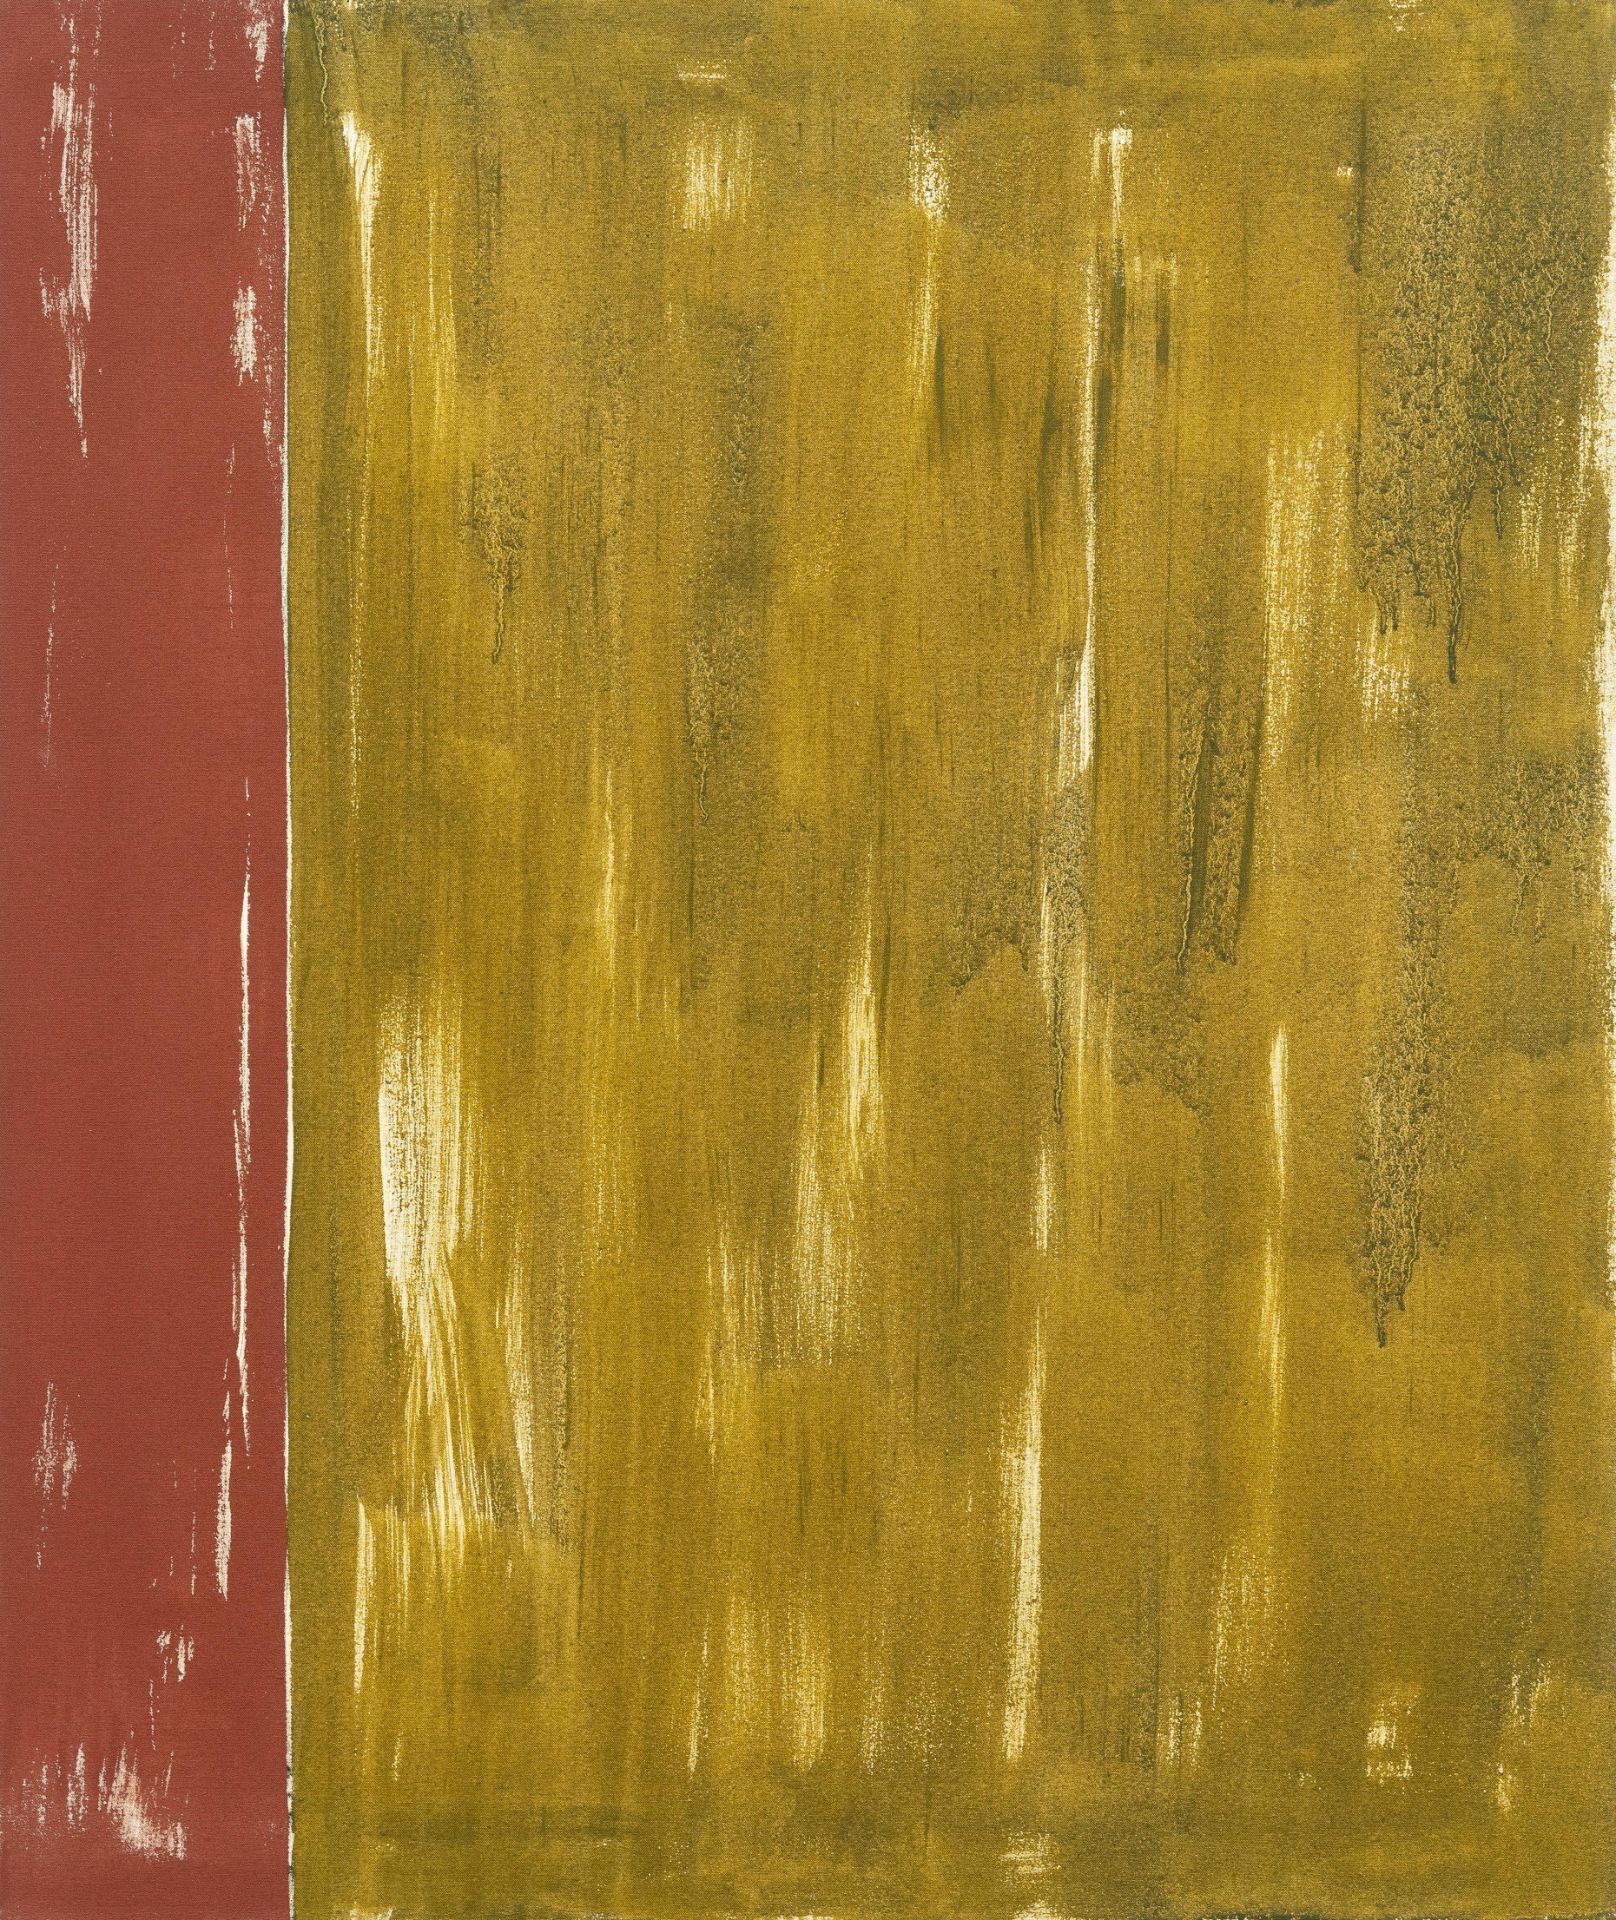 Günther Förg (1952 Füssen - Freiburg i. Br. 2013) – Untitled.Acrylic on canvas. (19)95. C. 120 x 100